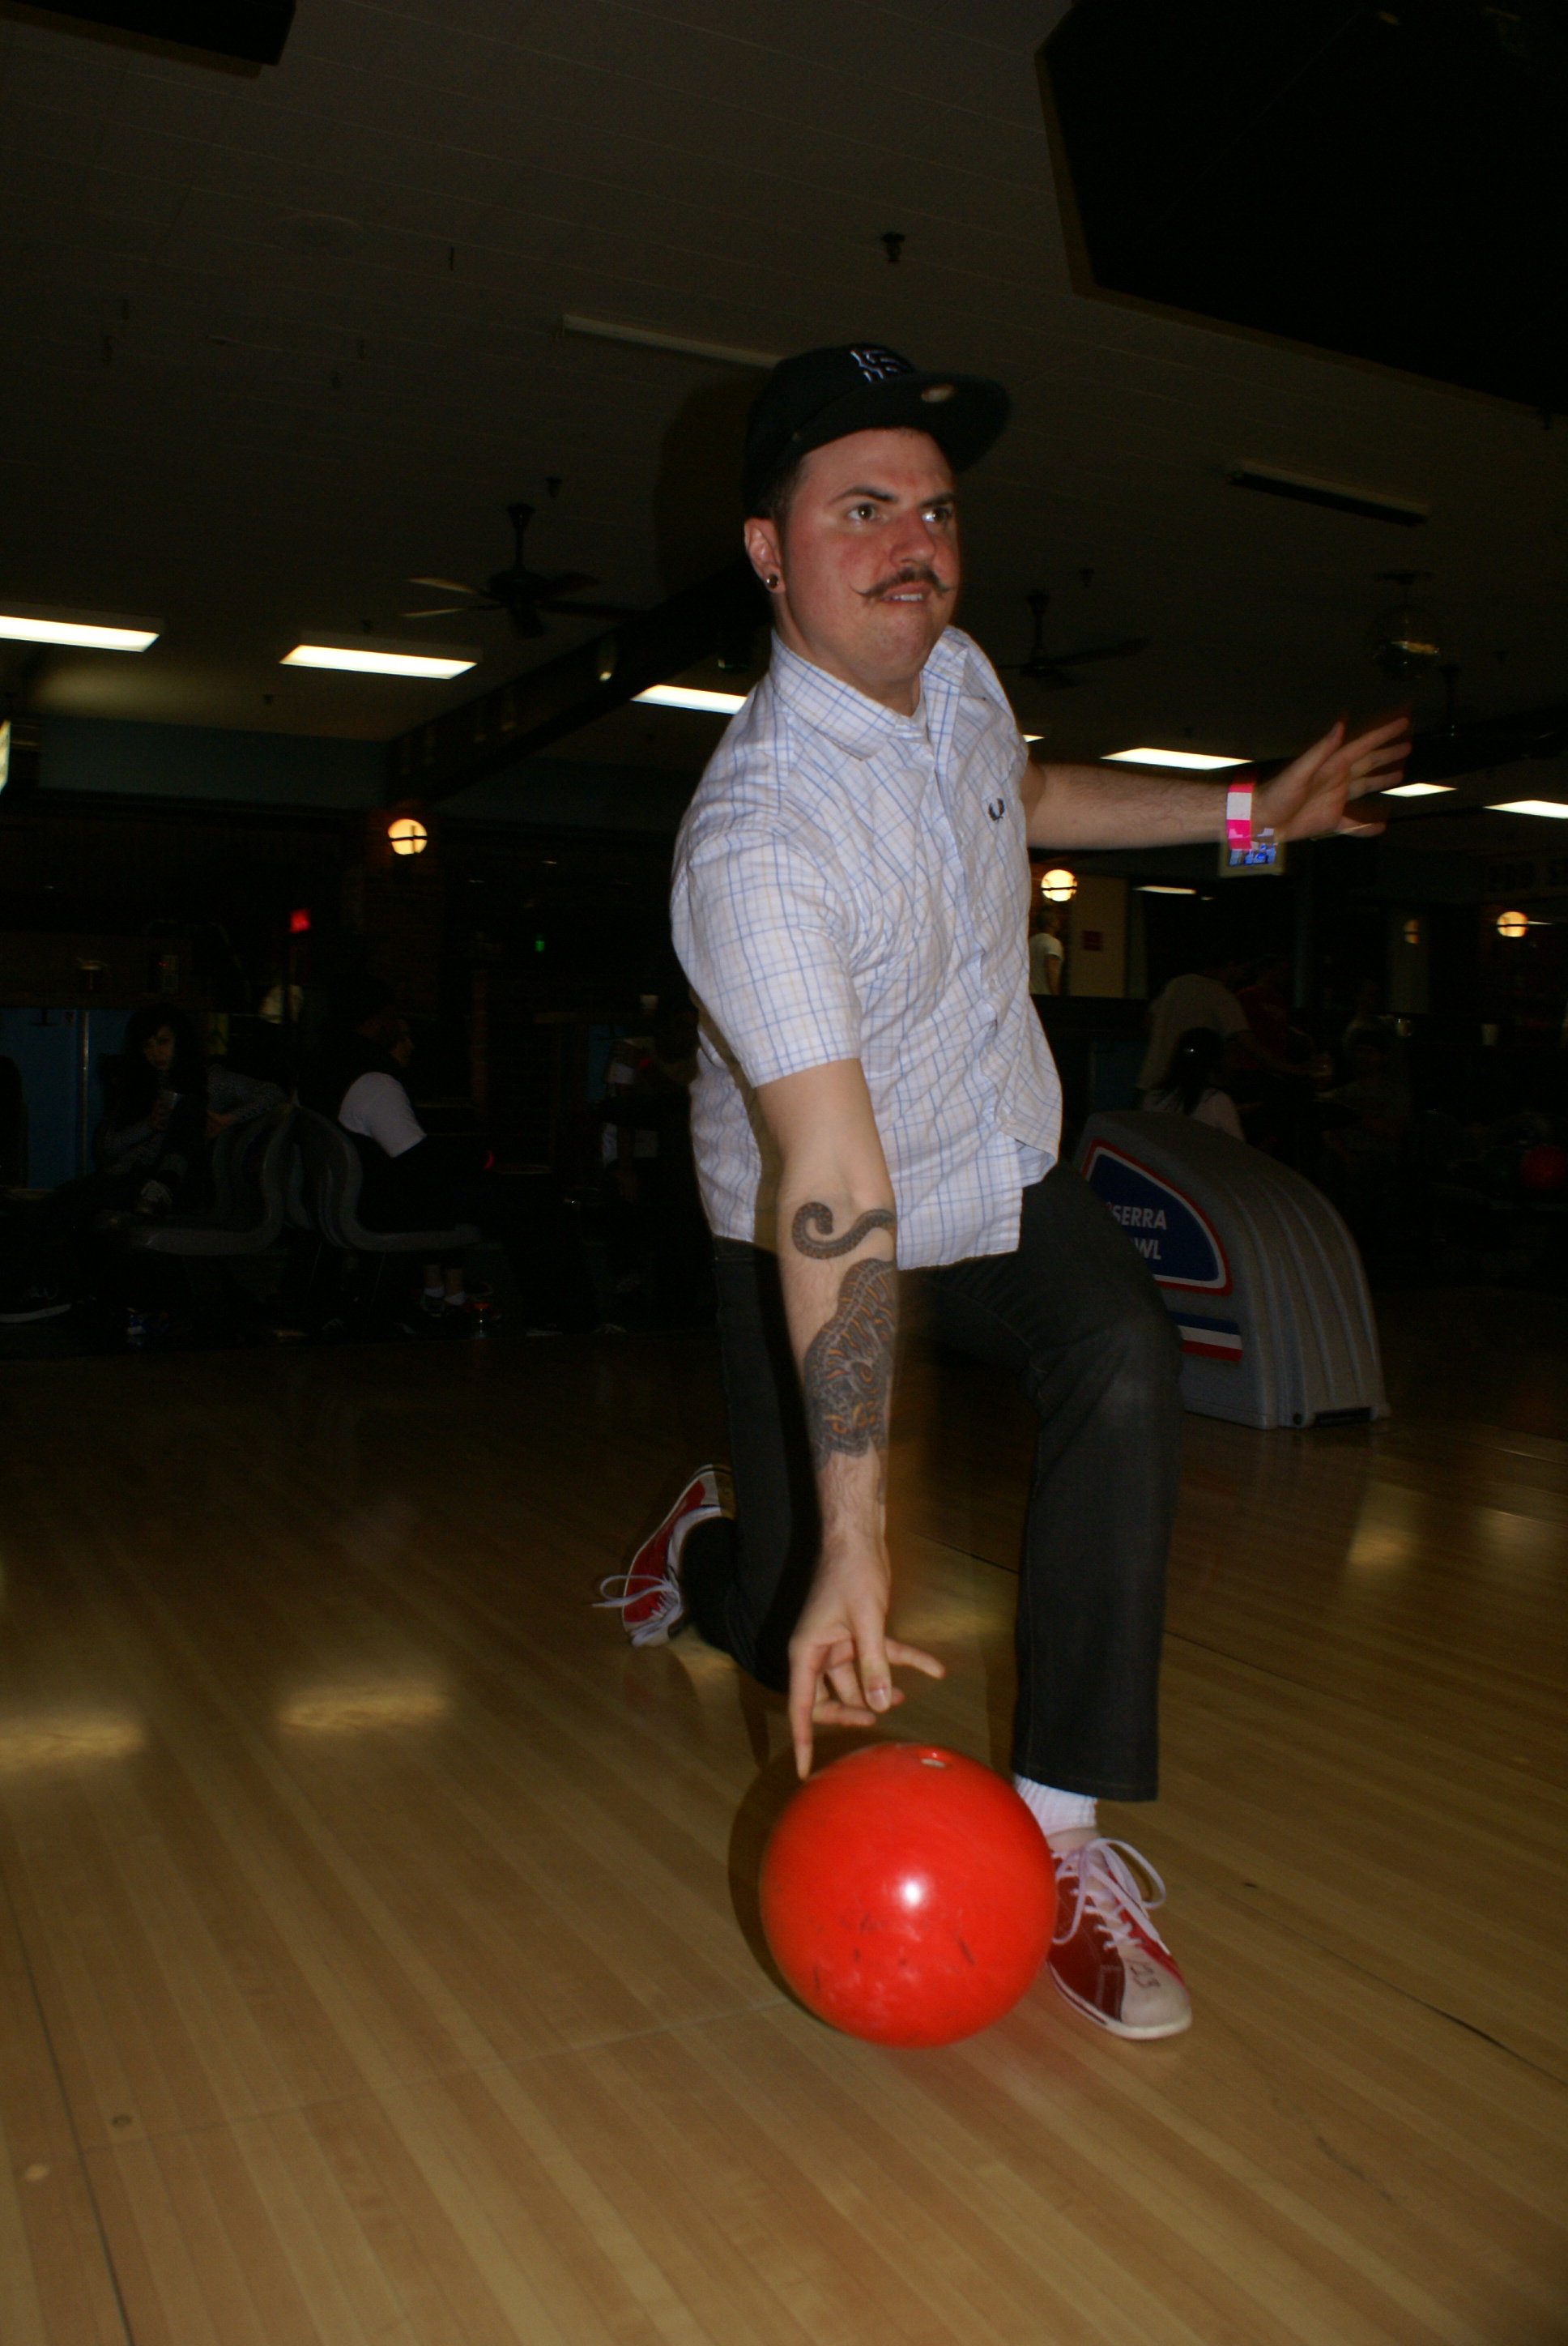 david bowling